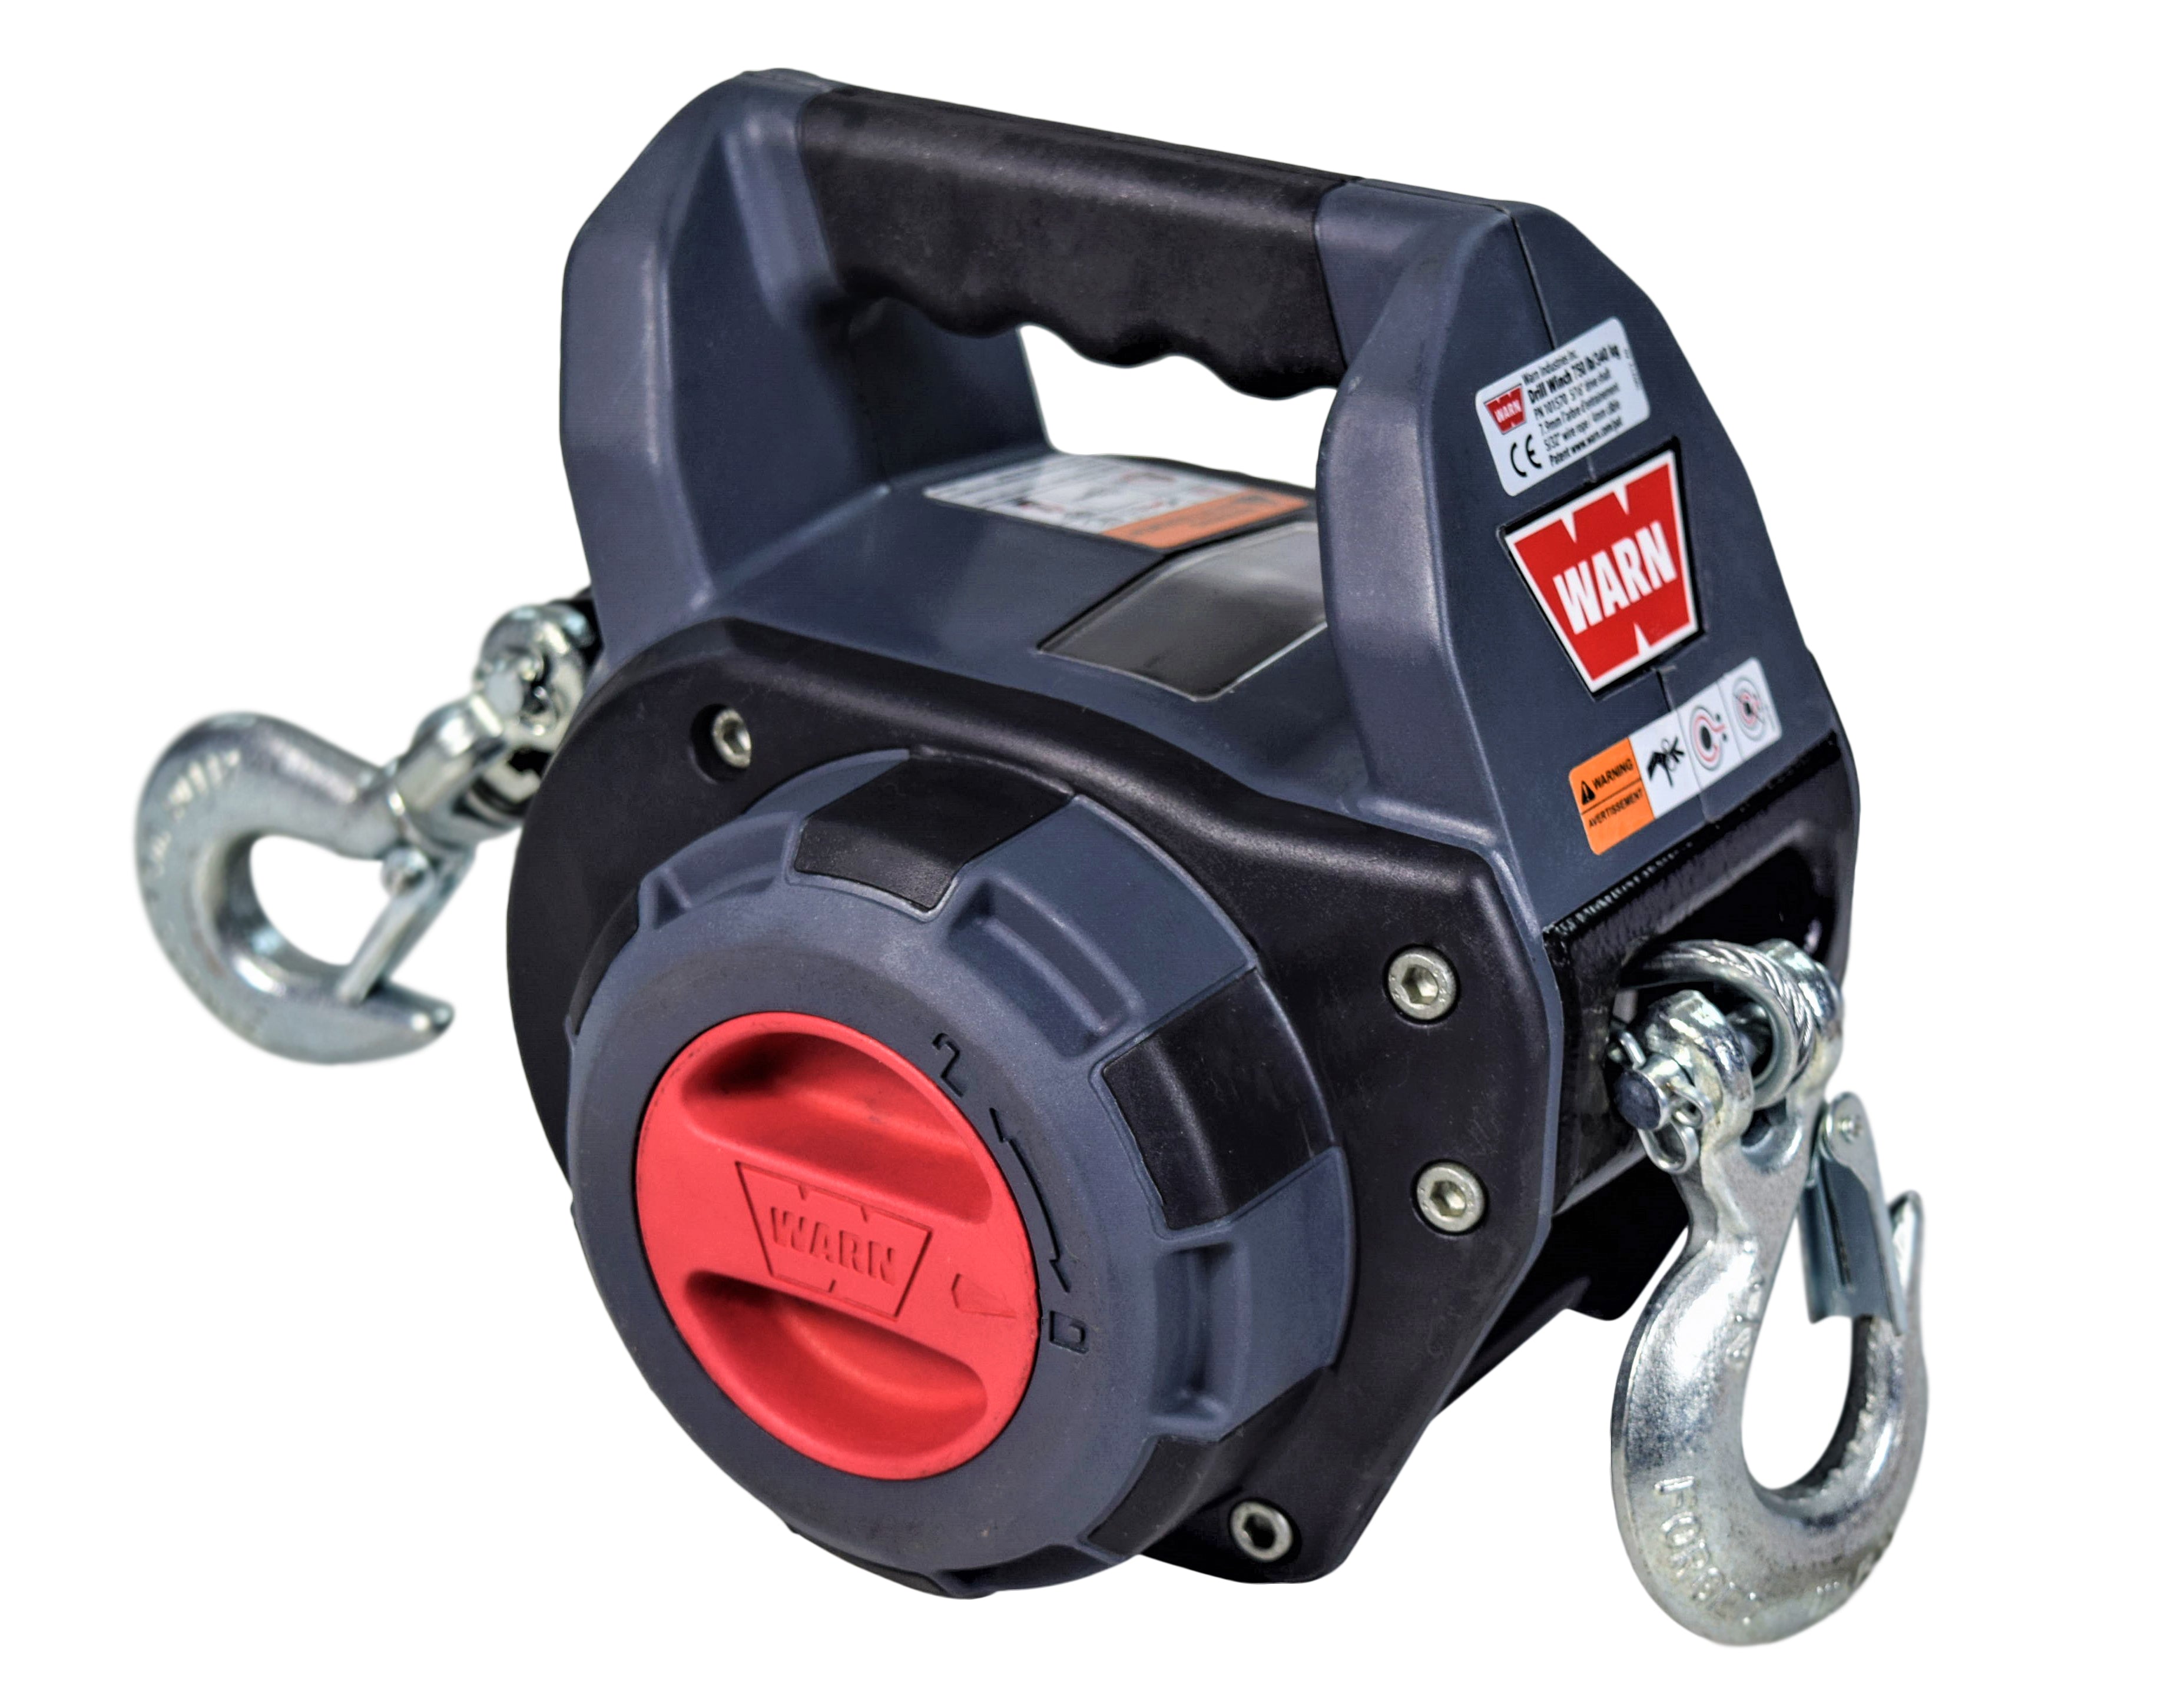 Warn-101570-Drill-Winch-750-lbs-Capacity-40-Steel-Rope-Free-spool-Clutch-image-2